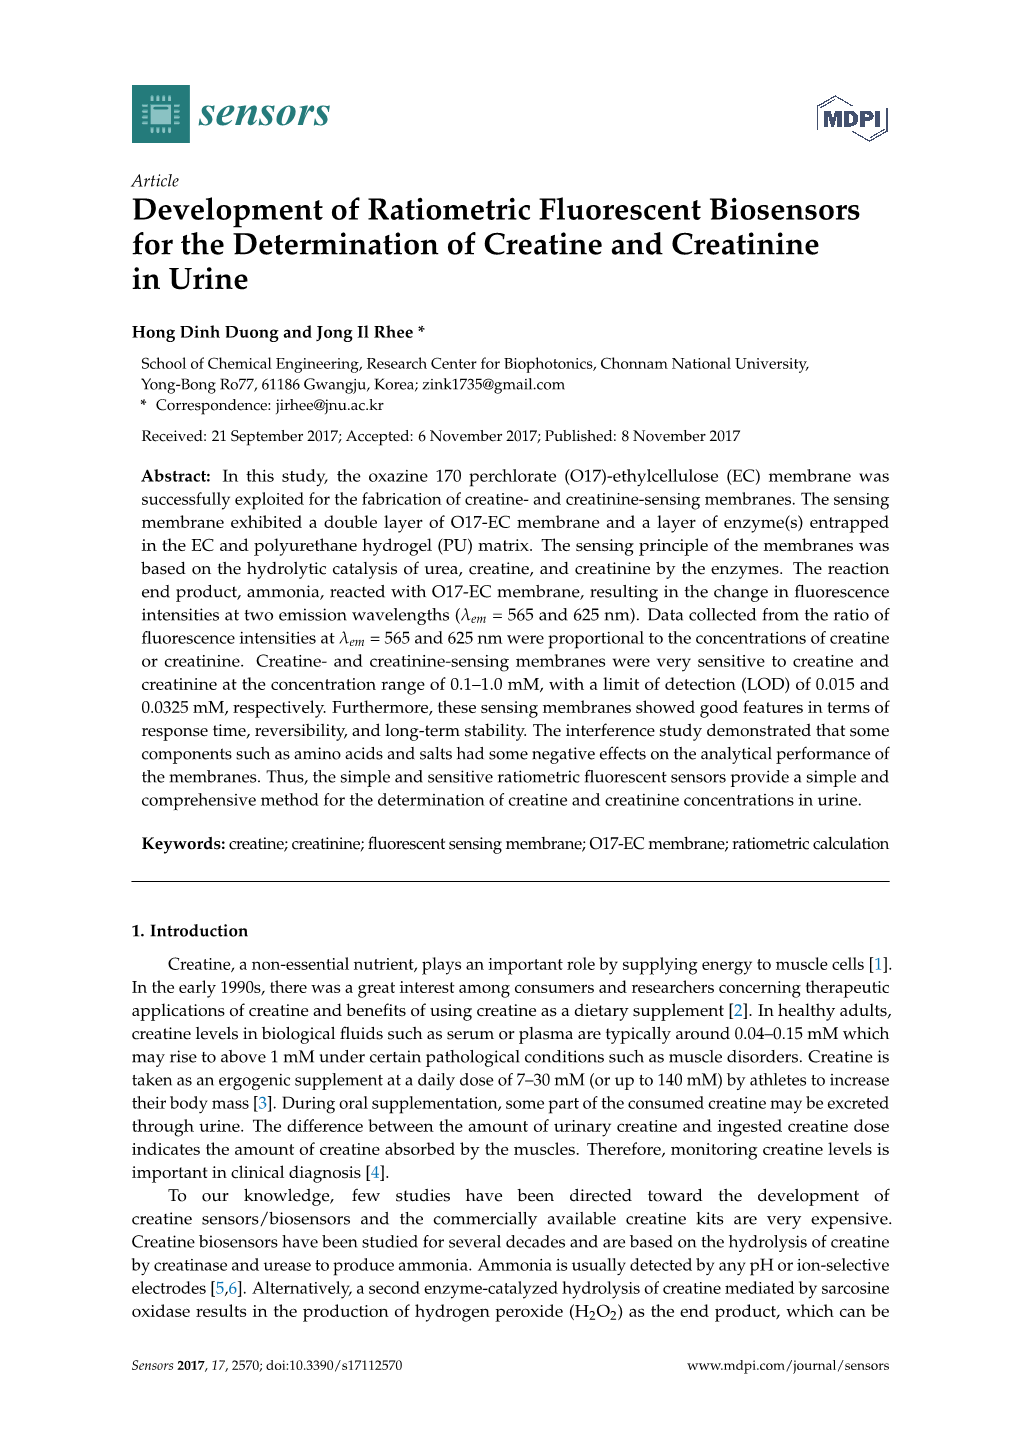 Development of Ratiometric Fluorescent Biosensors for the Determination of Creatine and Creatinine in Urine